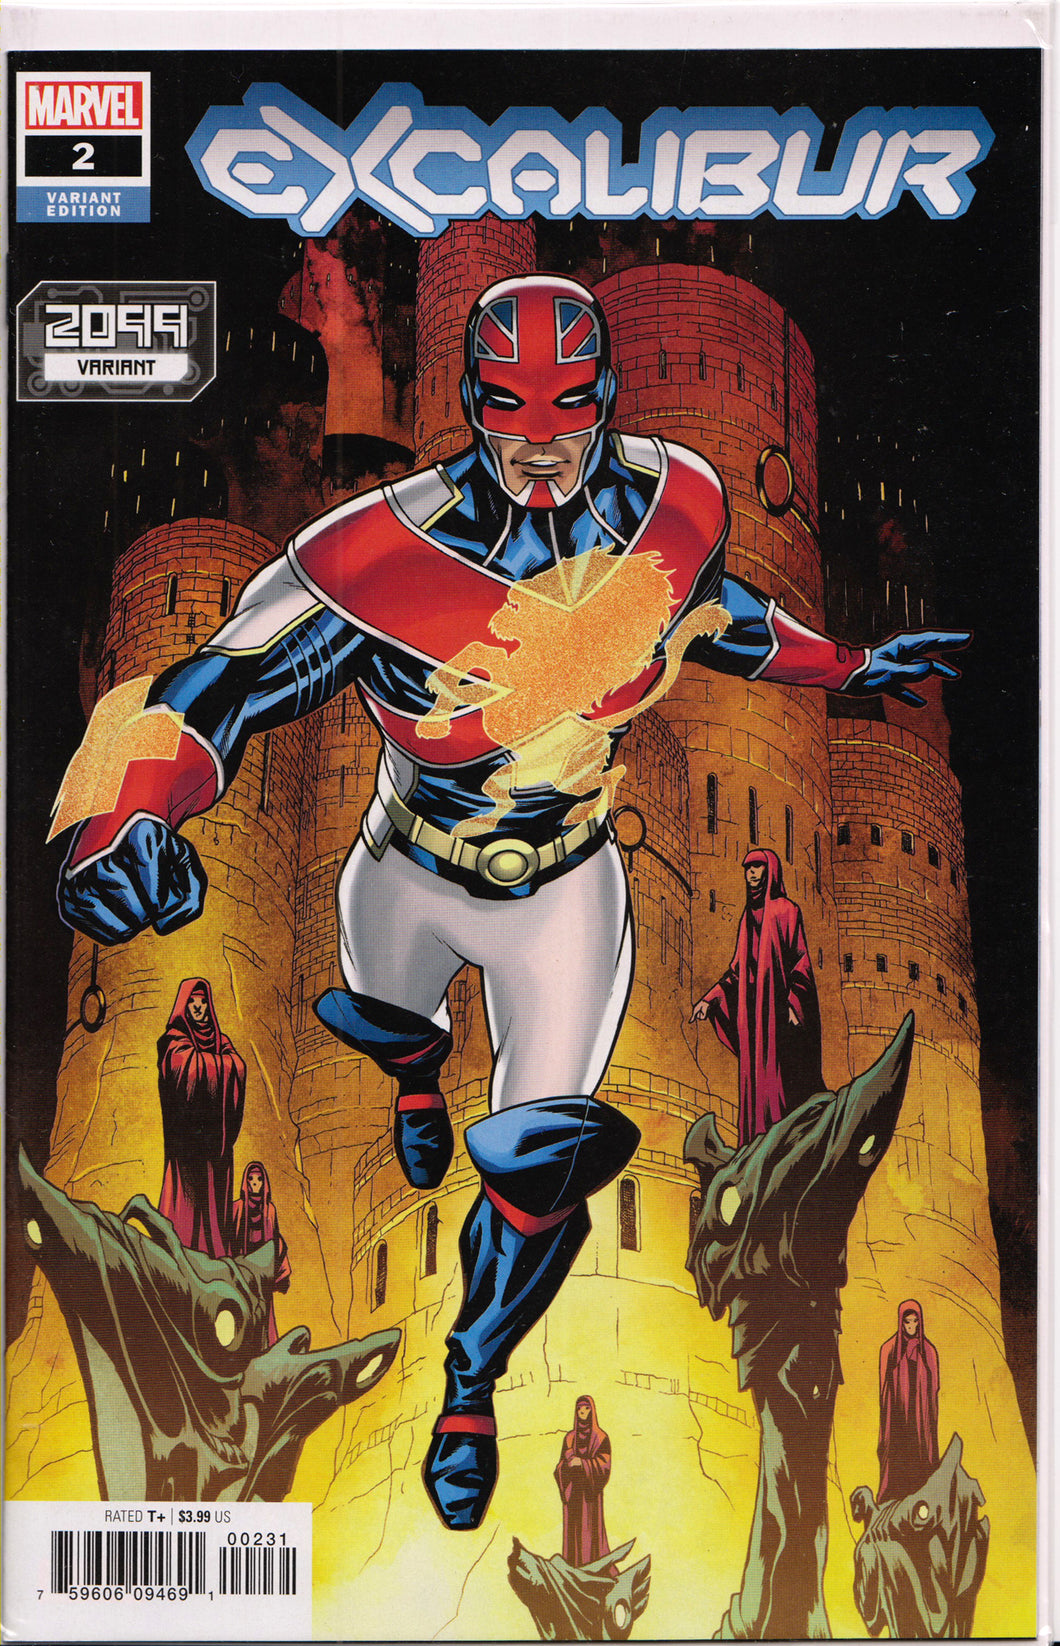 EXCALIBUR #2 (2099 VARIANT) COMIC BOOK ~ Marvel Comics